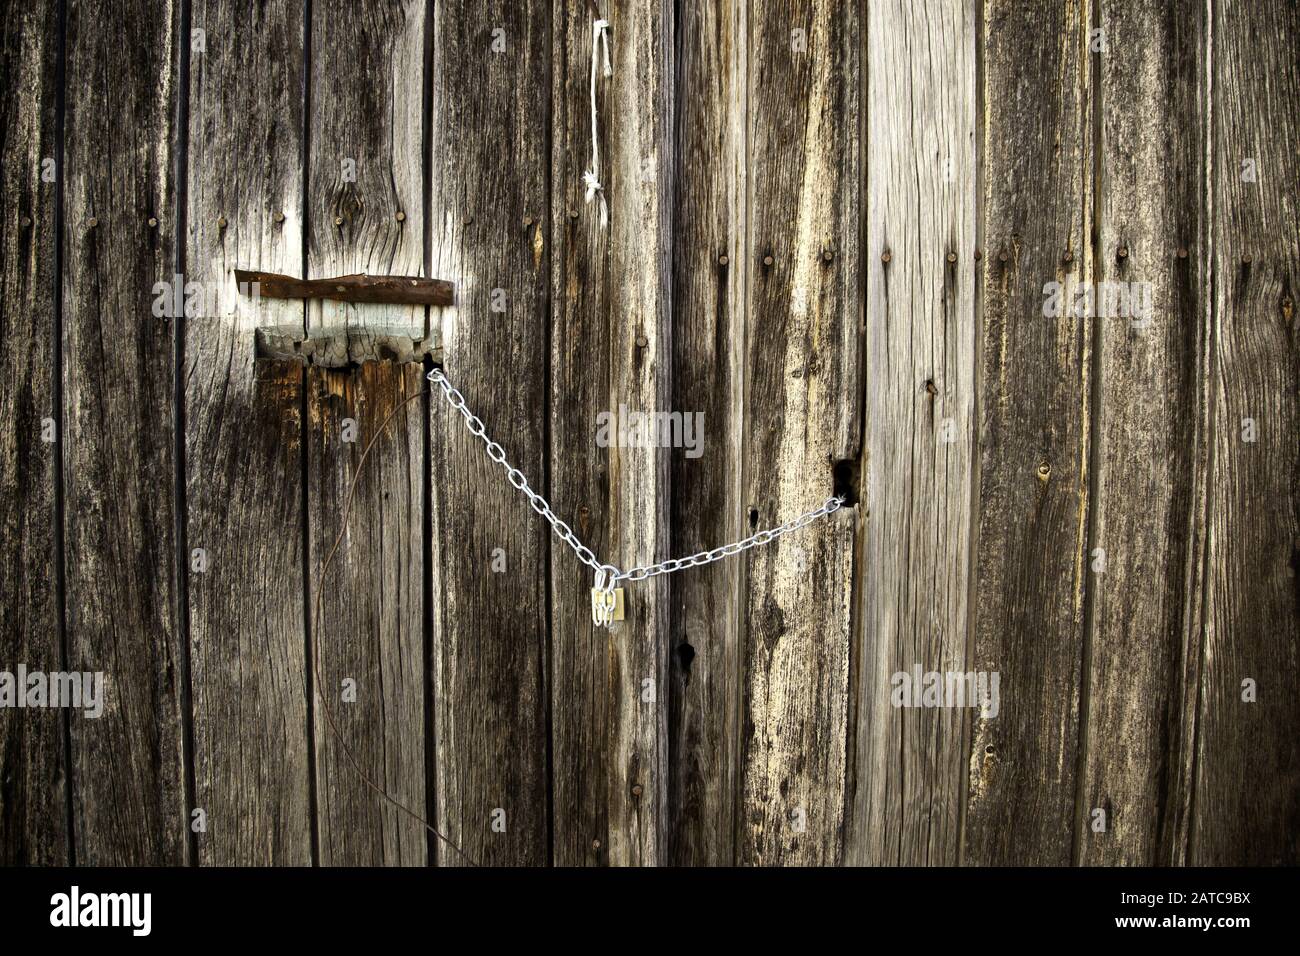 Broken wooden door with padlock, construction and architecture Stock Photo